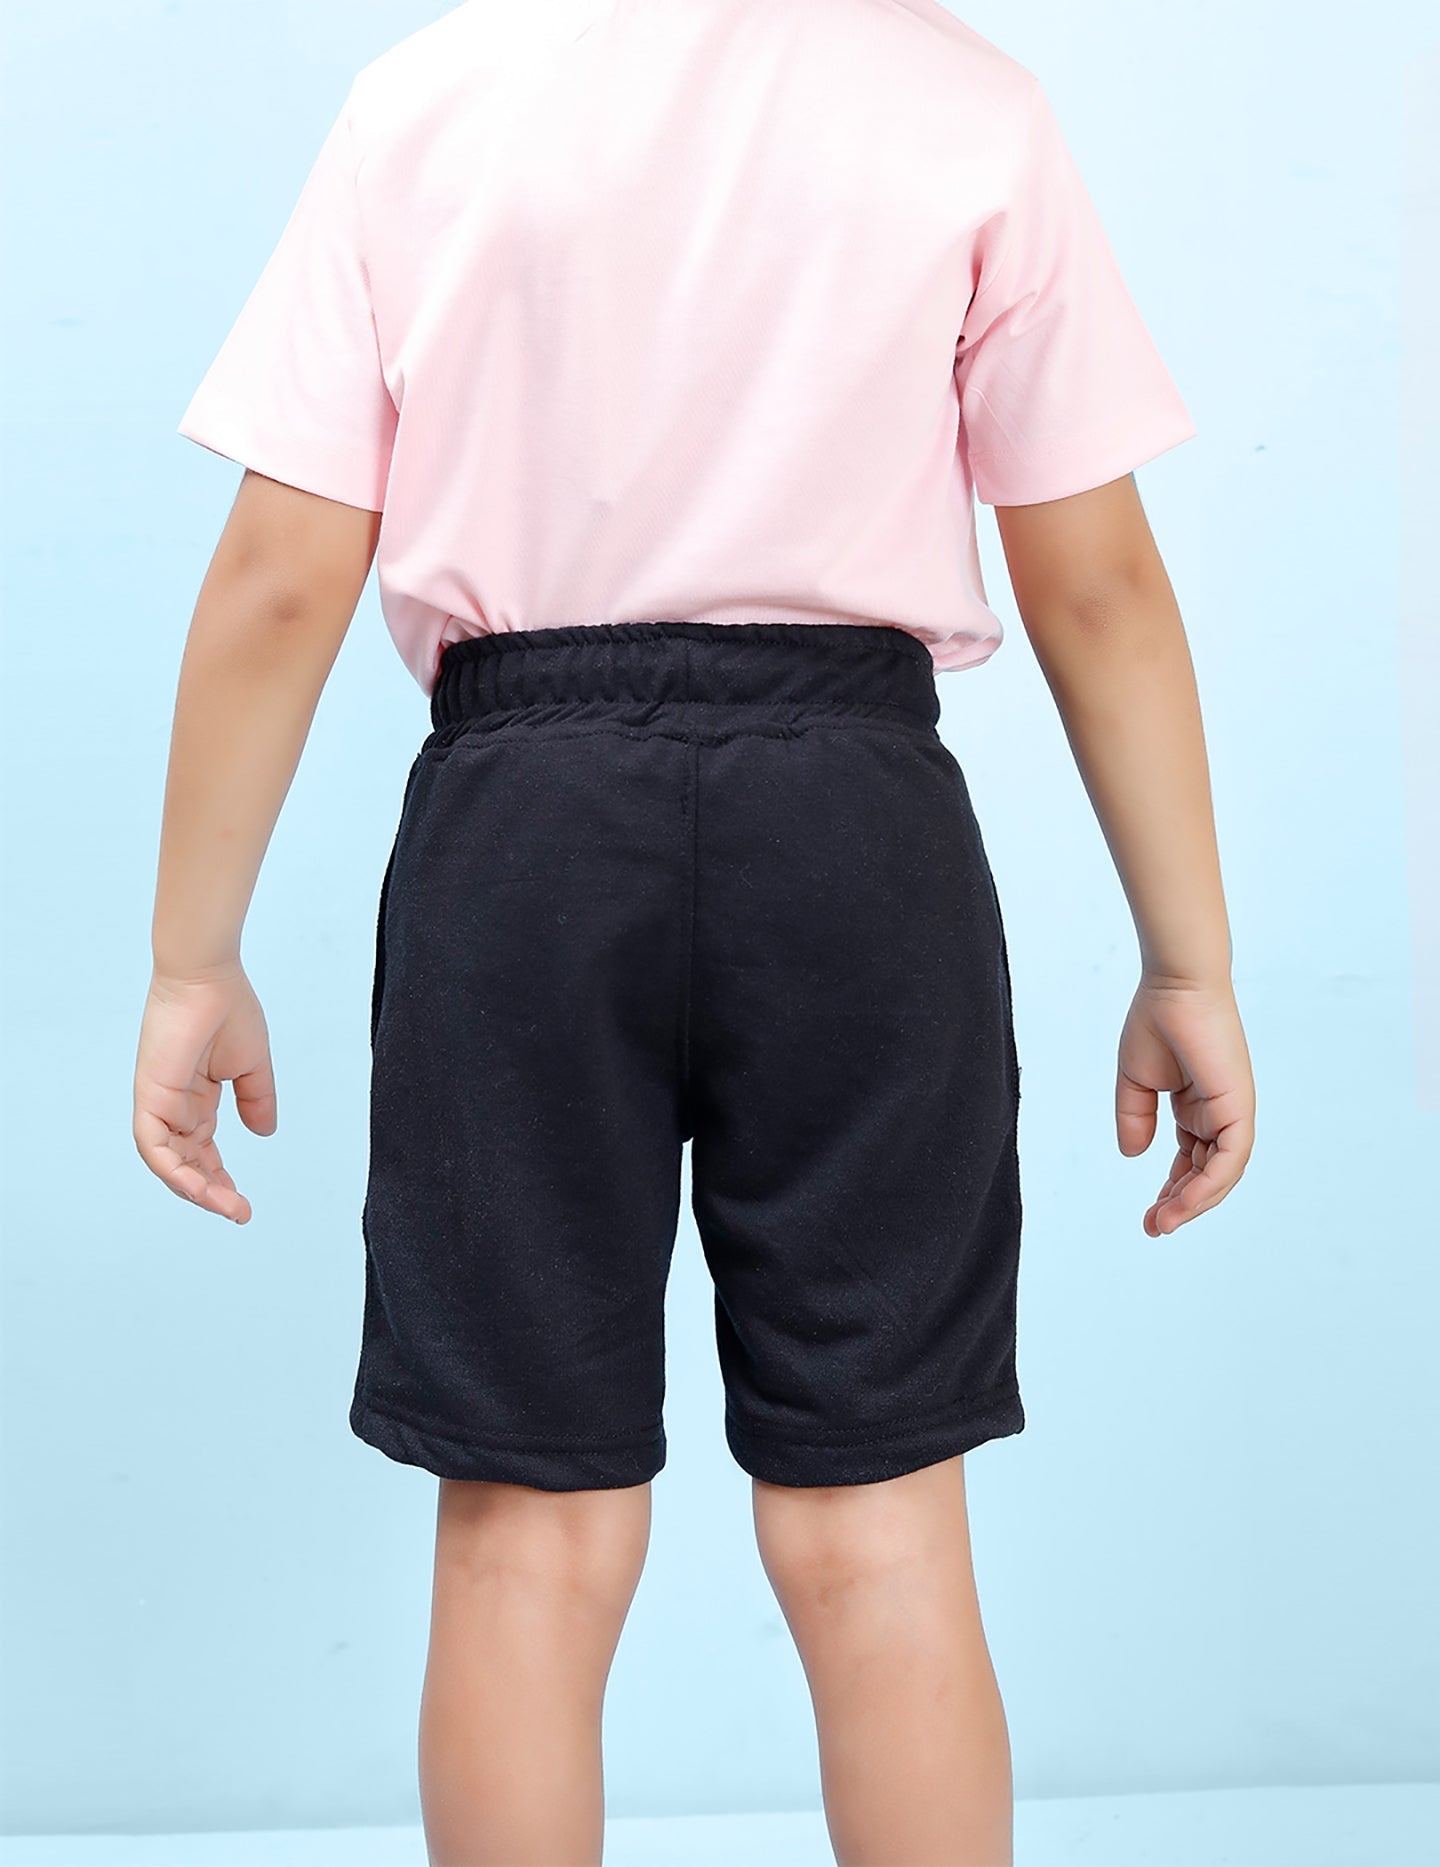 Nusyl Beach Printed Black Boys Shorts